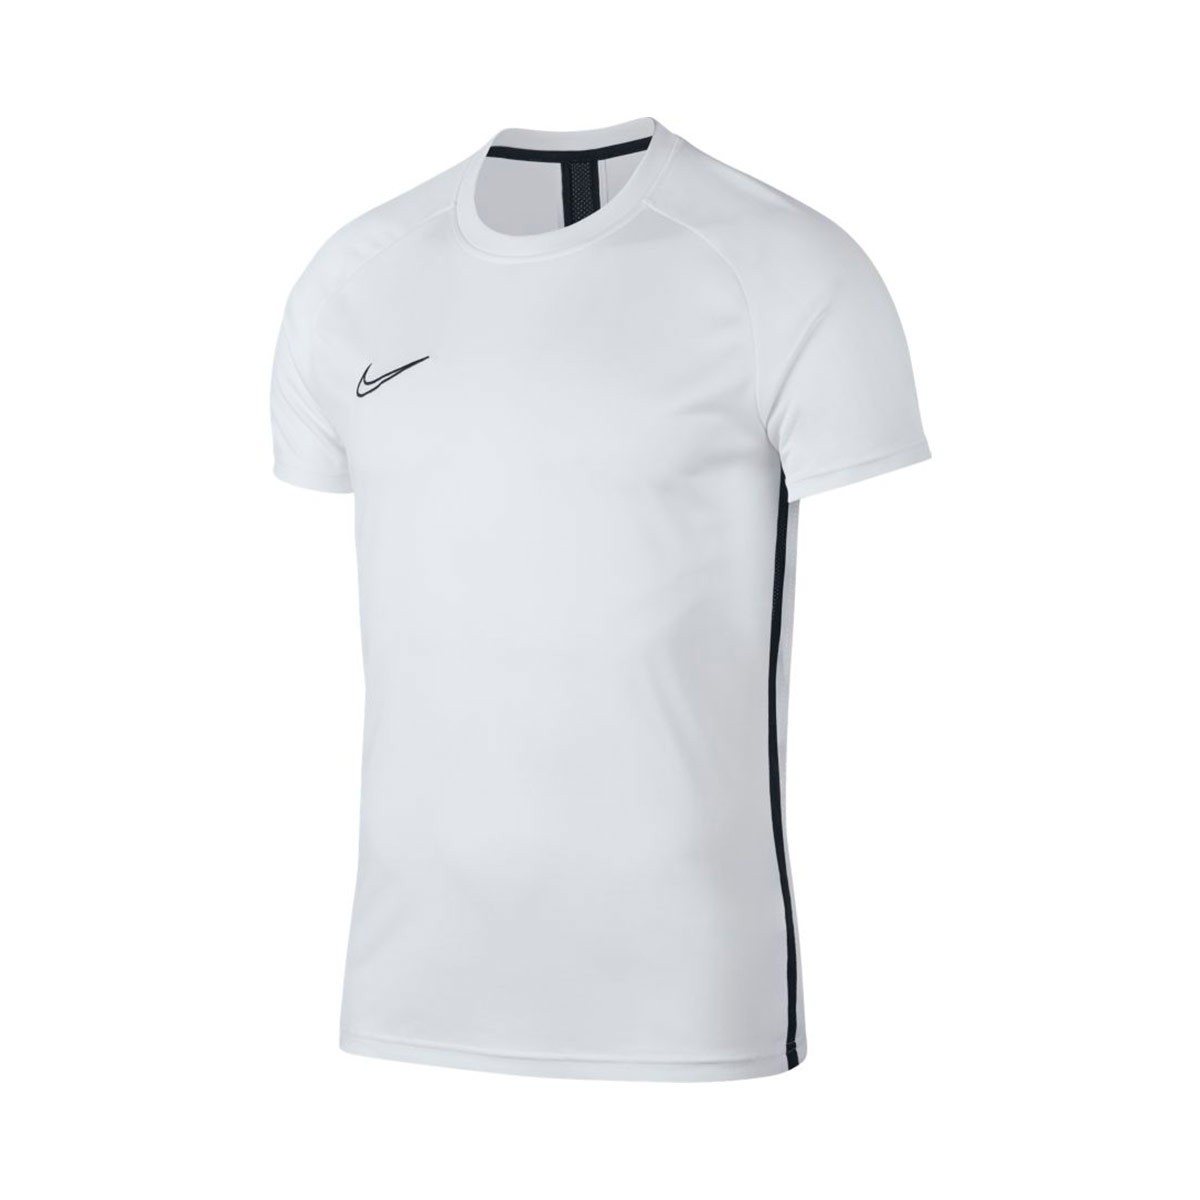 Playera Nike Dri-FIT Academy White-Black - Tienda de fútbol Fútbol Emotion